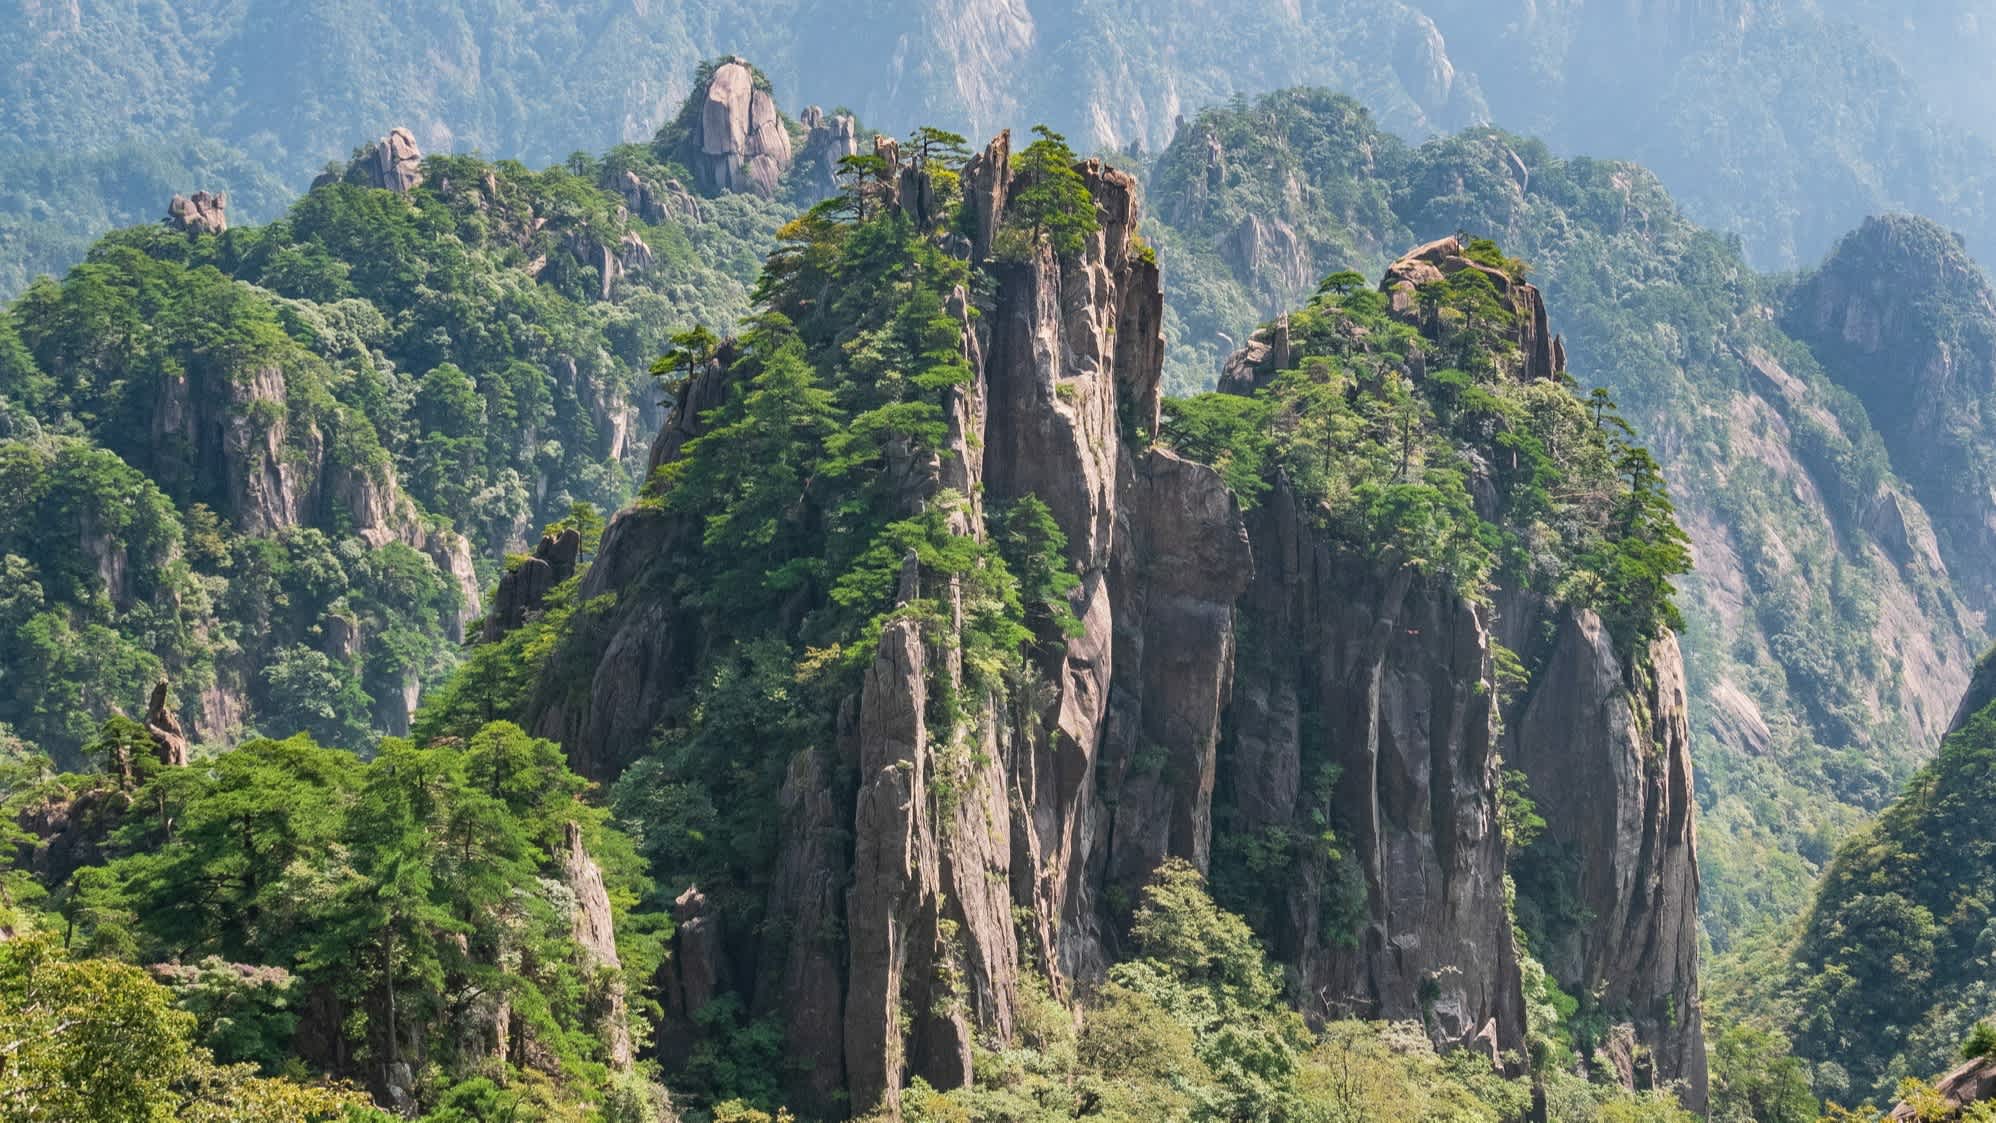 Green mountainous landscape of Huangshan, China.